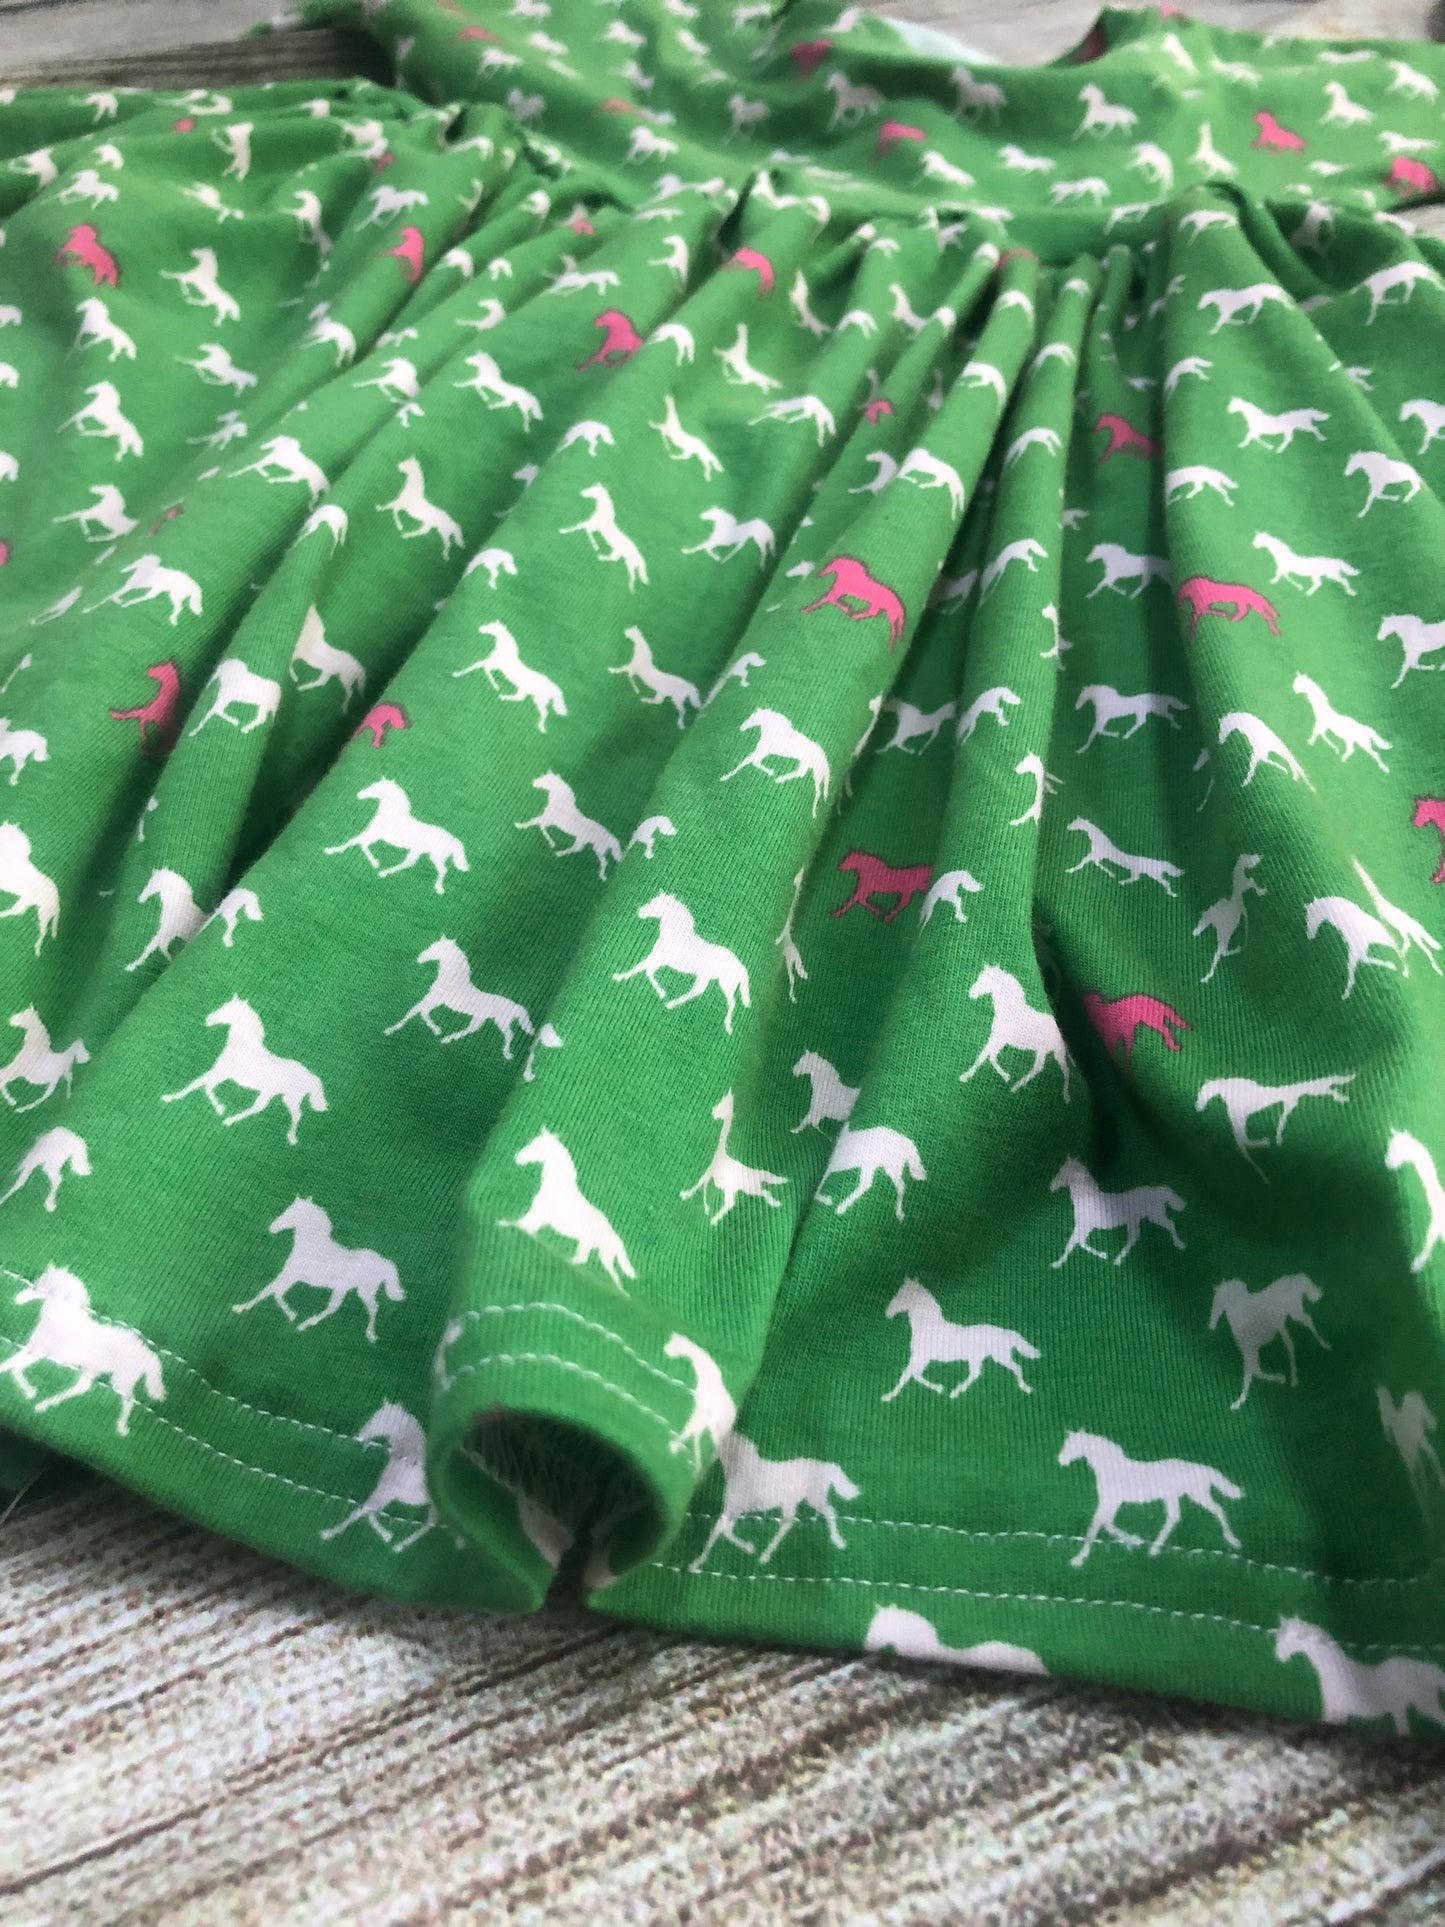 Playful Twirl Dress Size 4T - Horses on Green - Sample Sale